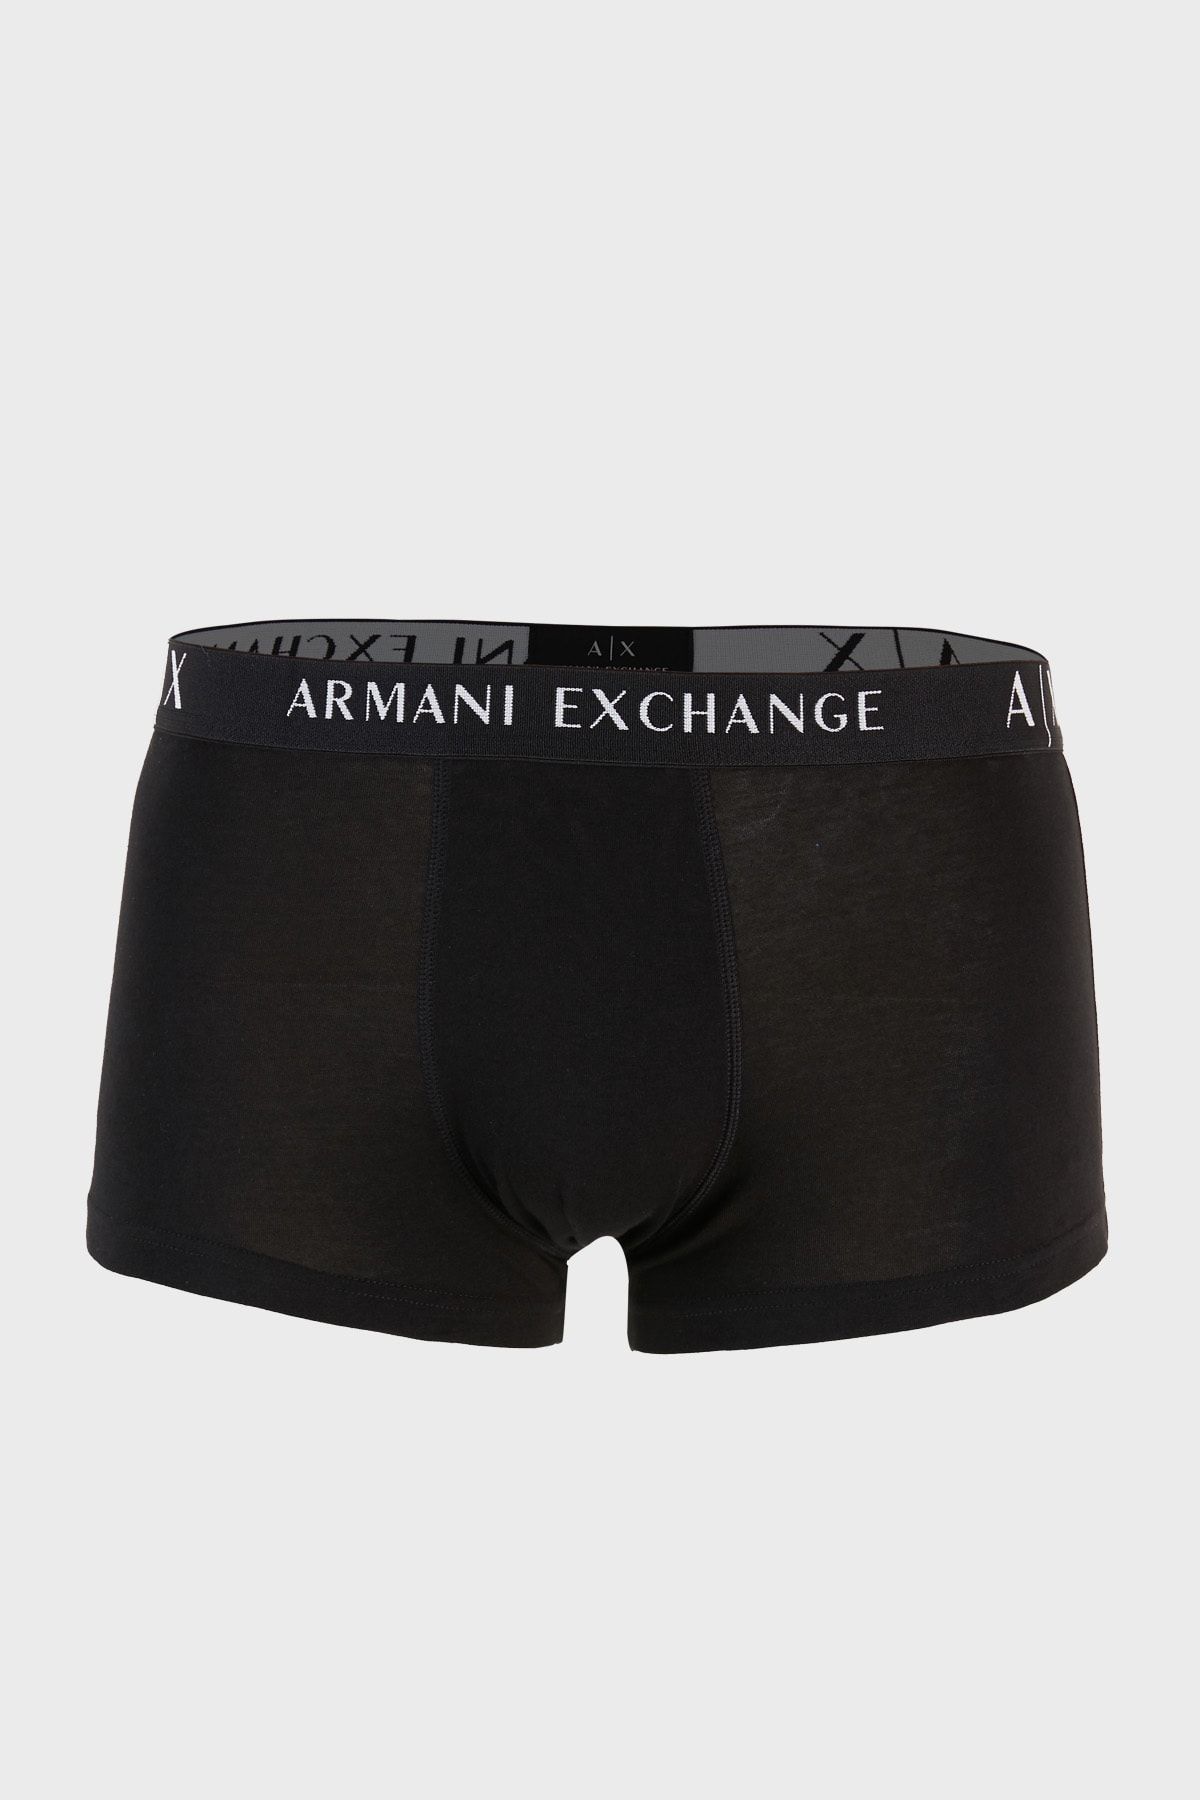 Armani Exchange Cotton 2 Pack Boxer Men's Boxer 957027 Cc282 42520 -  Trendyol